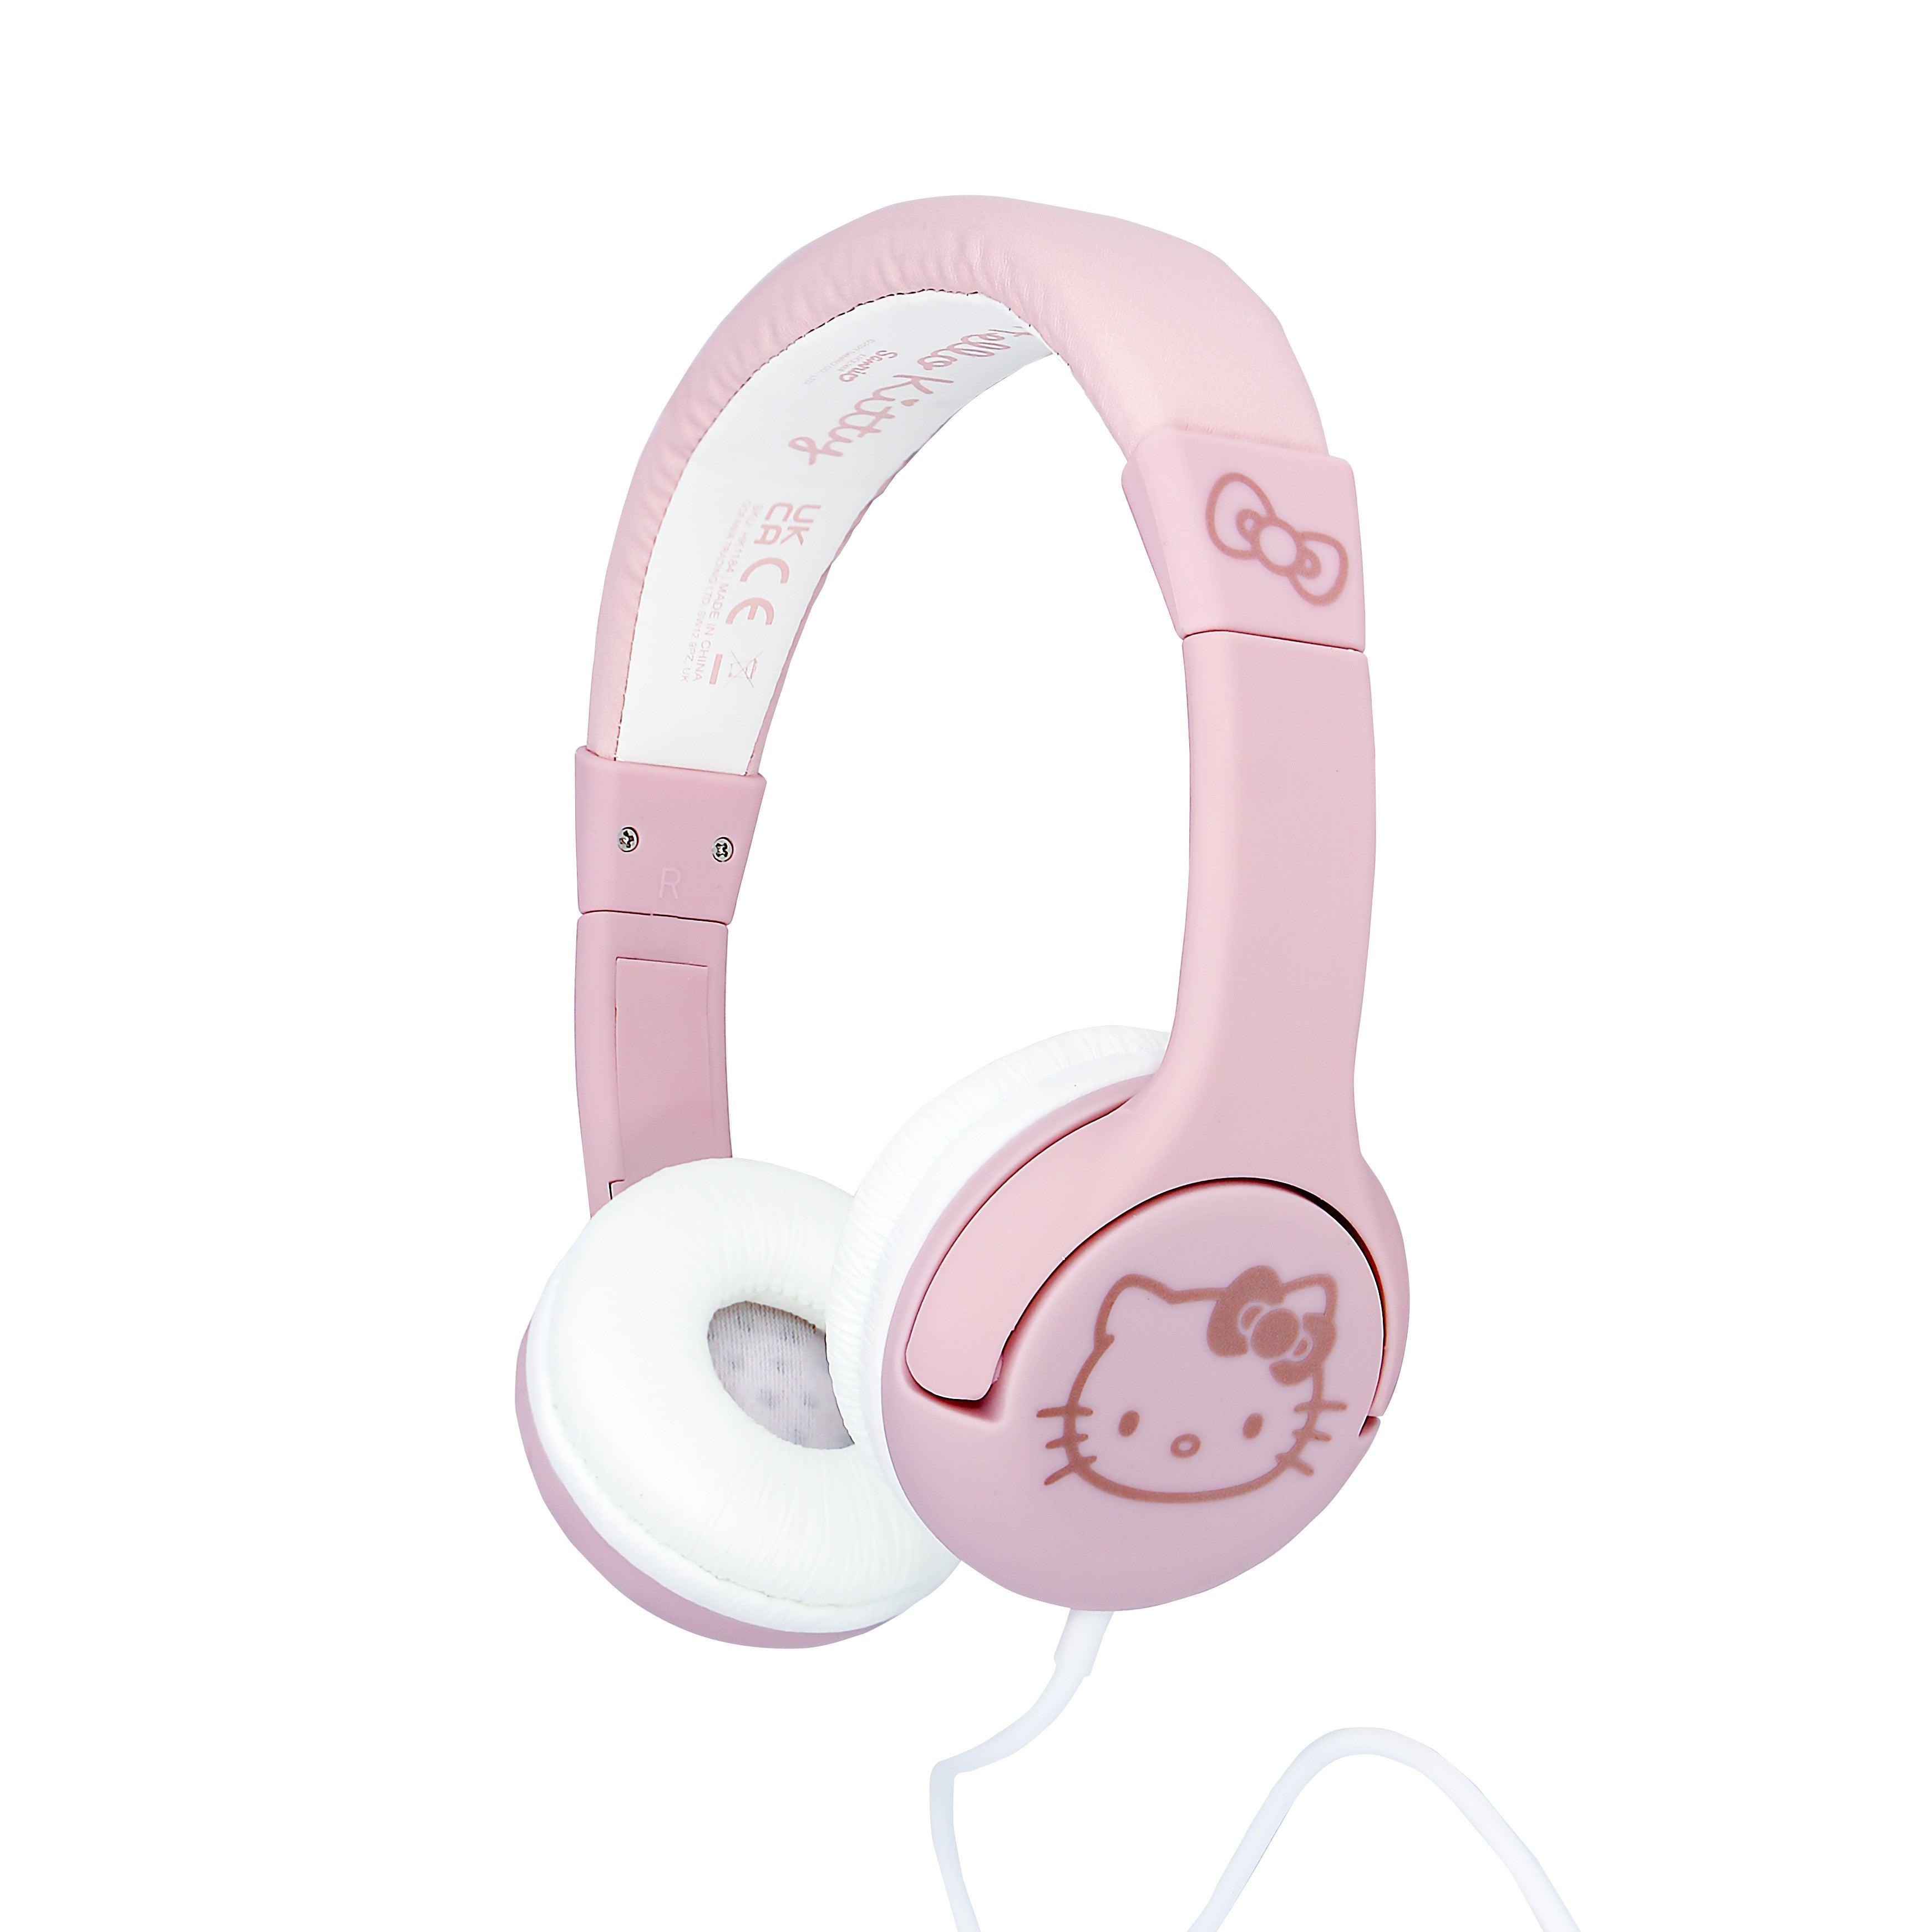 Hello Kitty Soft Pink & Rose Gold Kids Wired Headphones - childrensheadphones.co.uk